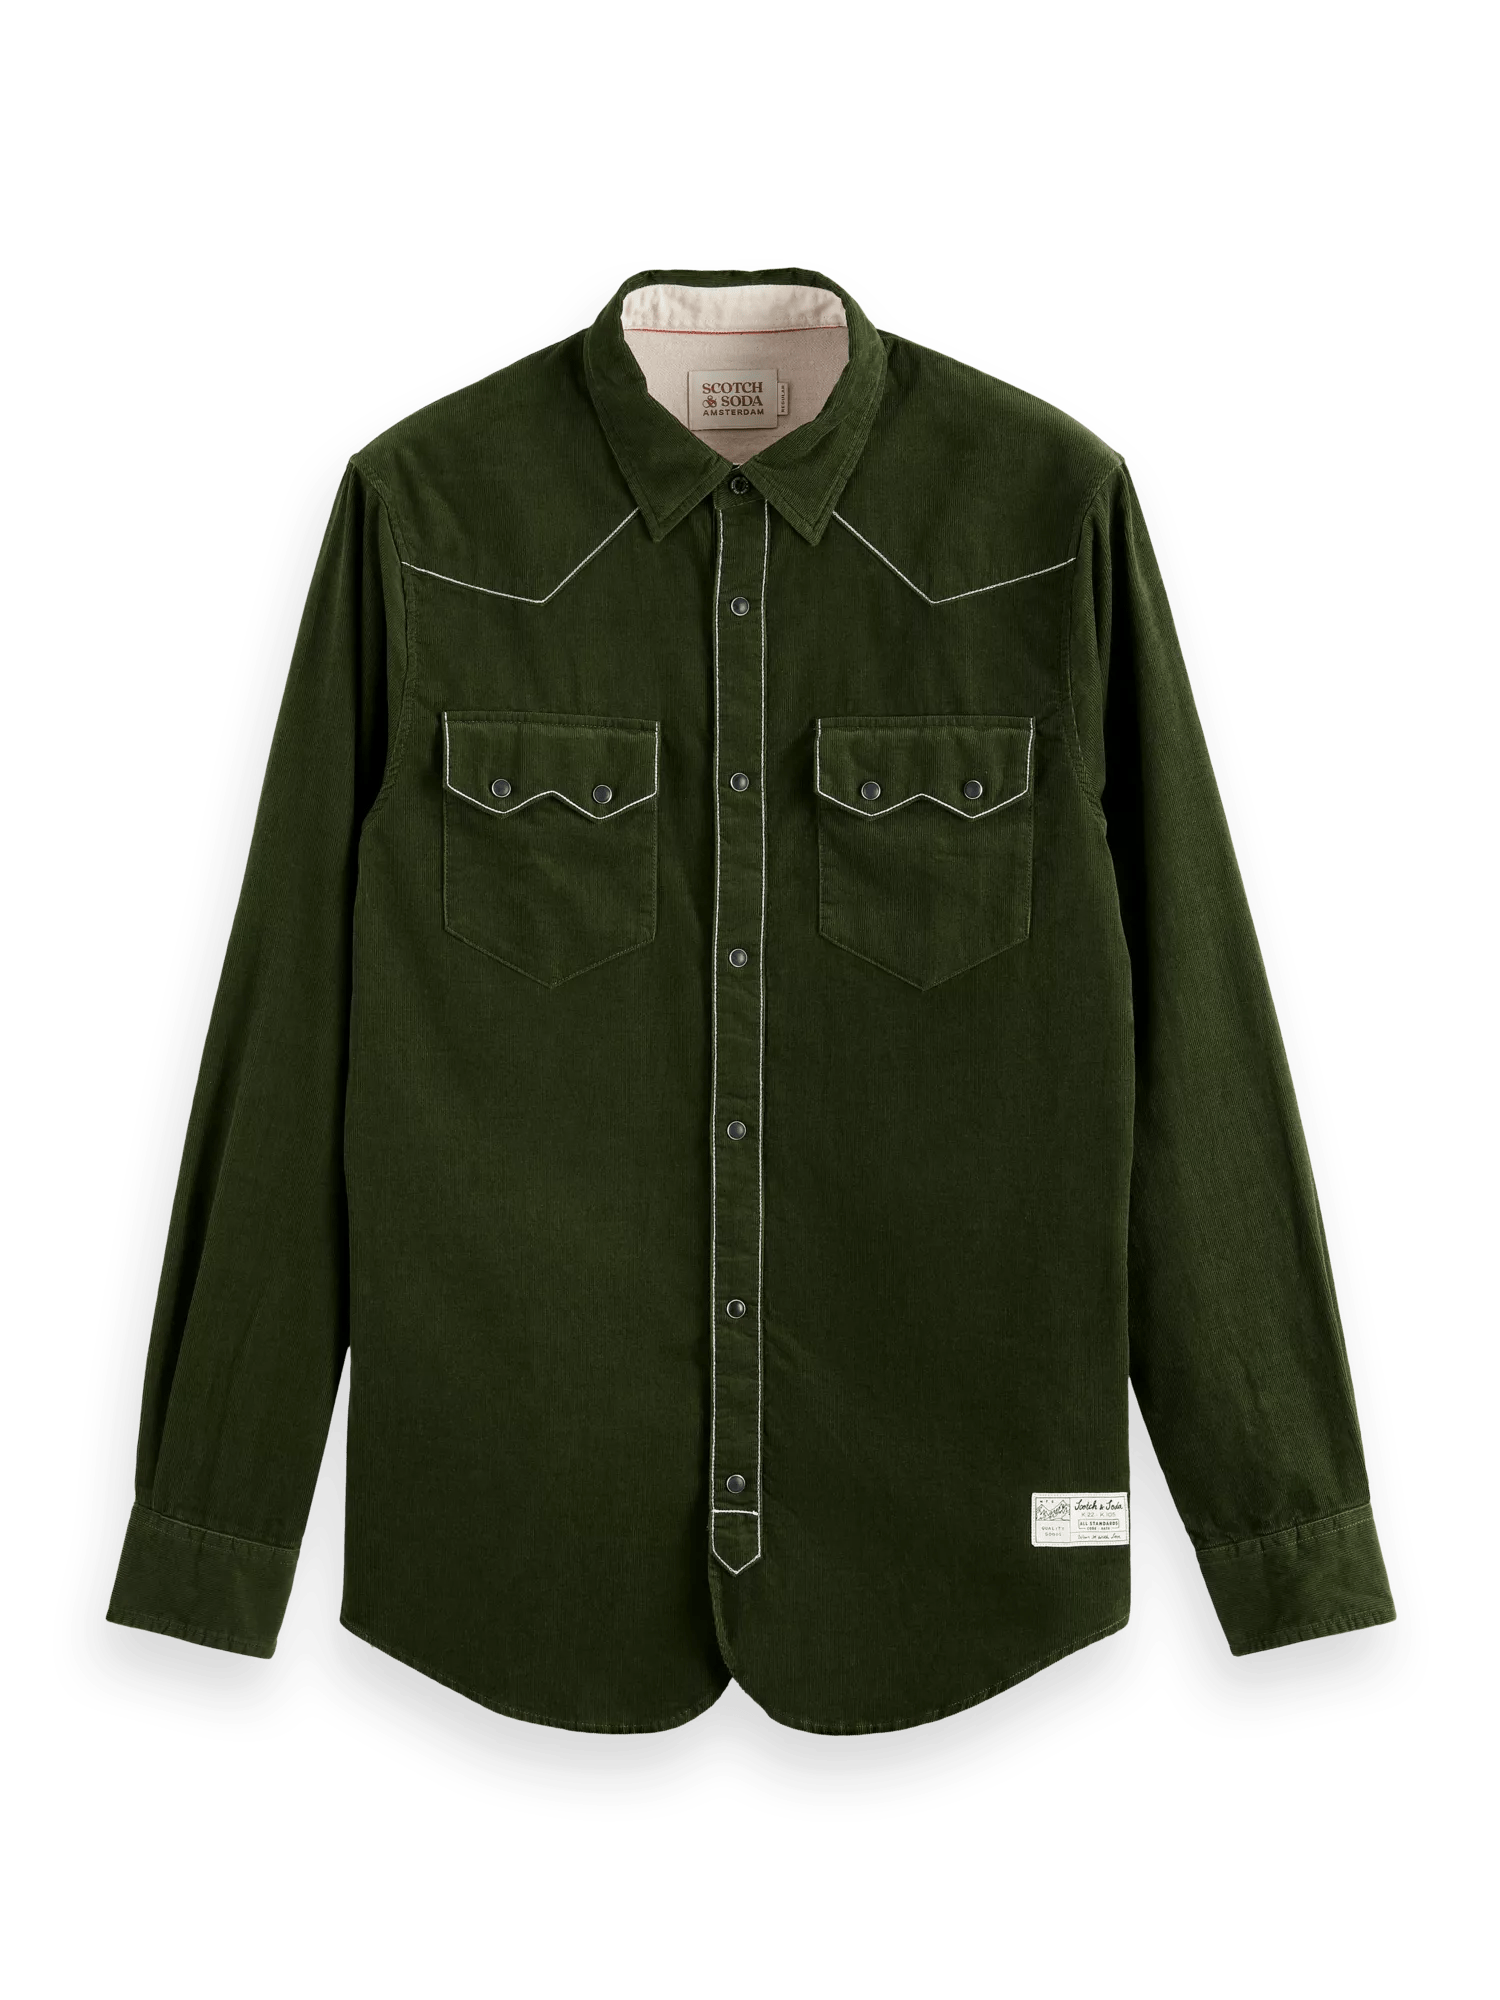 Scotch & Soda - Corduroy Western Shirt - Field Green